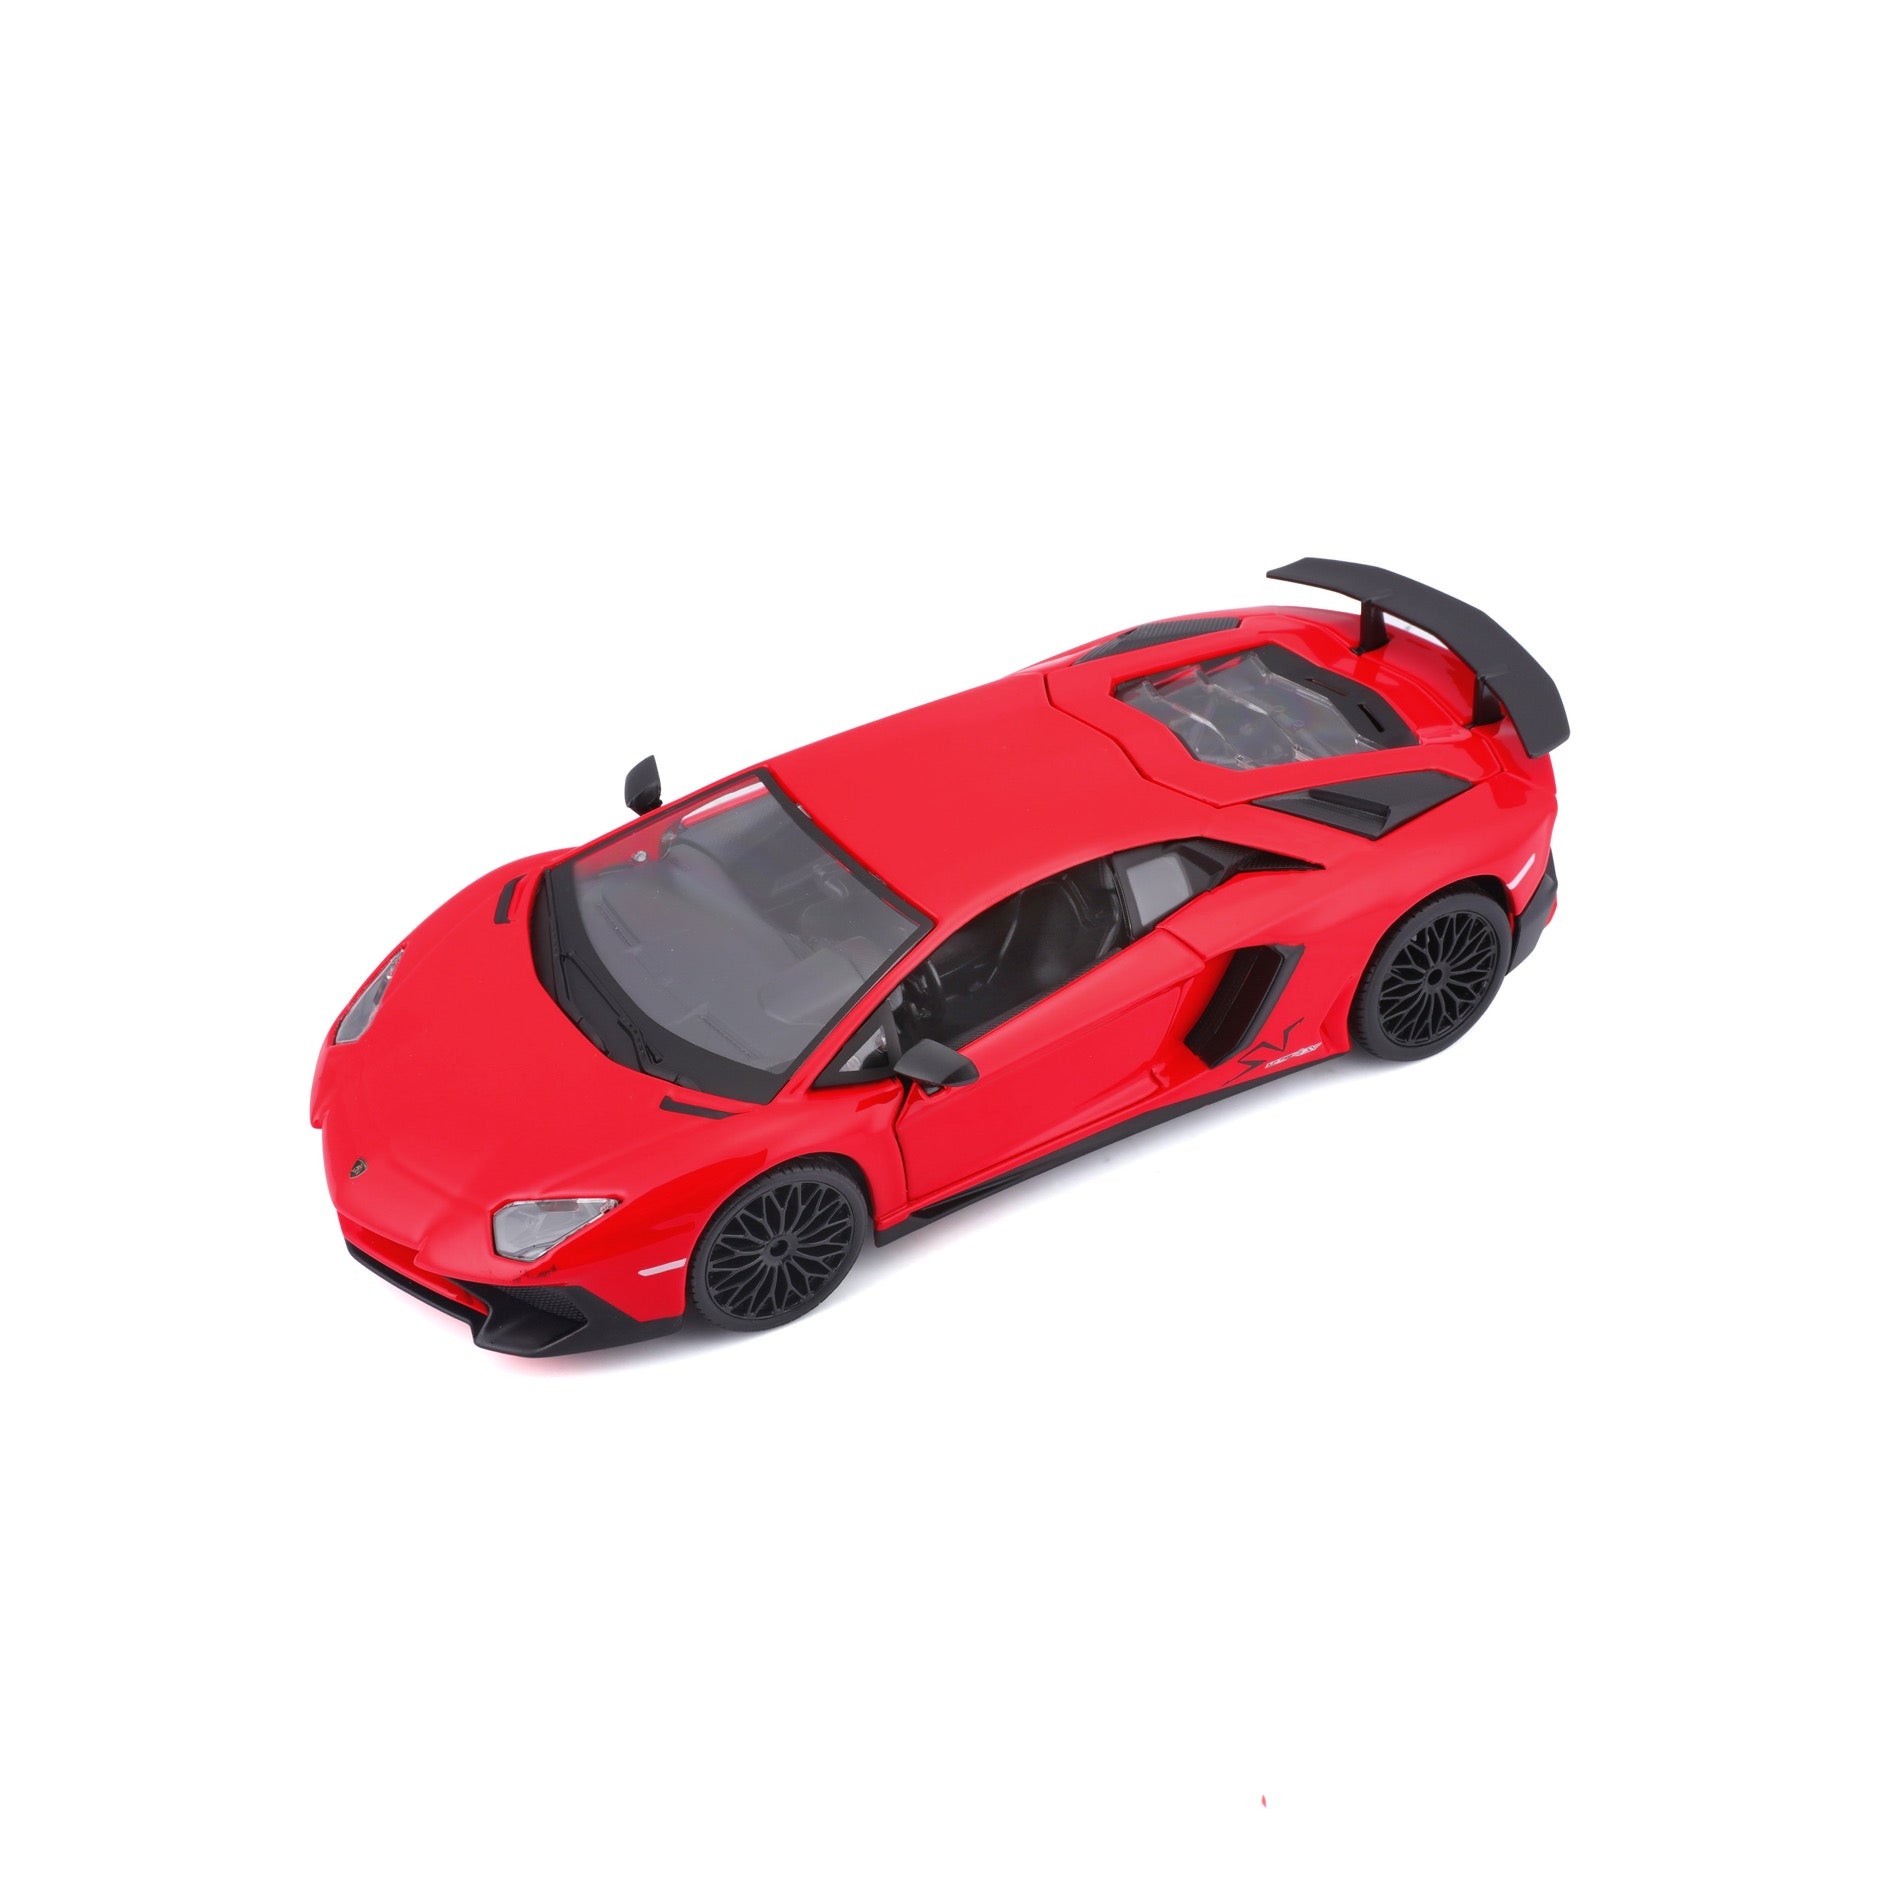 18-21079 Bburago - Lamborghini Aventador SV Coupé Red - 1:24